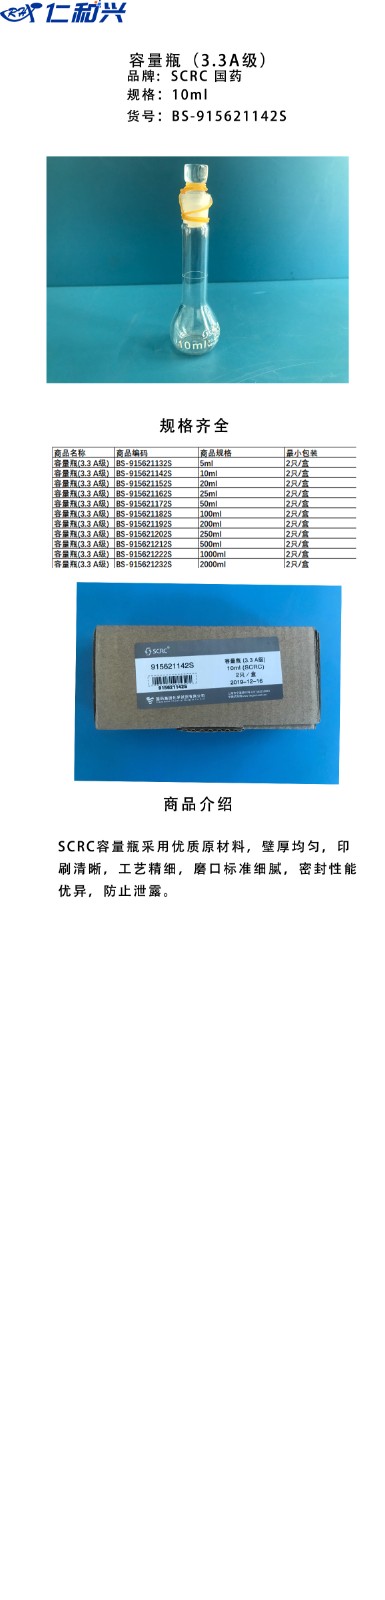 SCRC SCRC 青岛库 容量瓶(3.3 A级) 10ml 国药 可代办证书 10ml  2只/盒 青岛库 10ml  2只/盒 青岛库